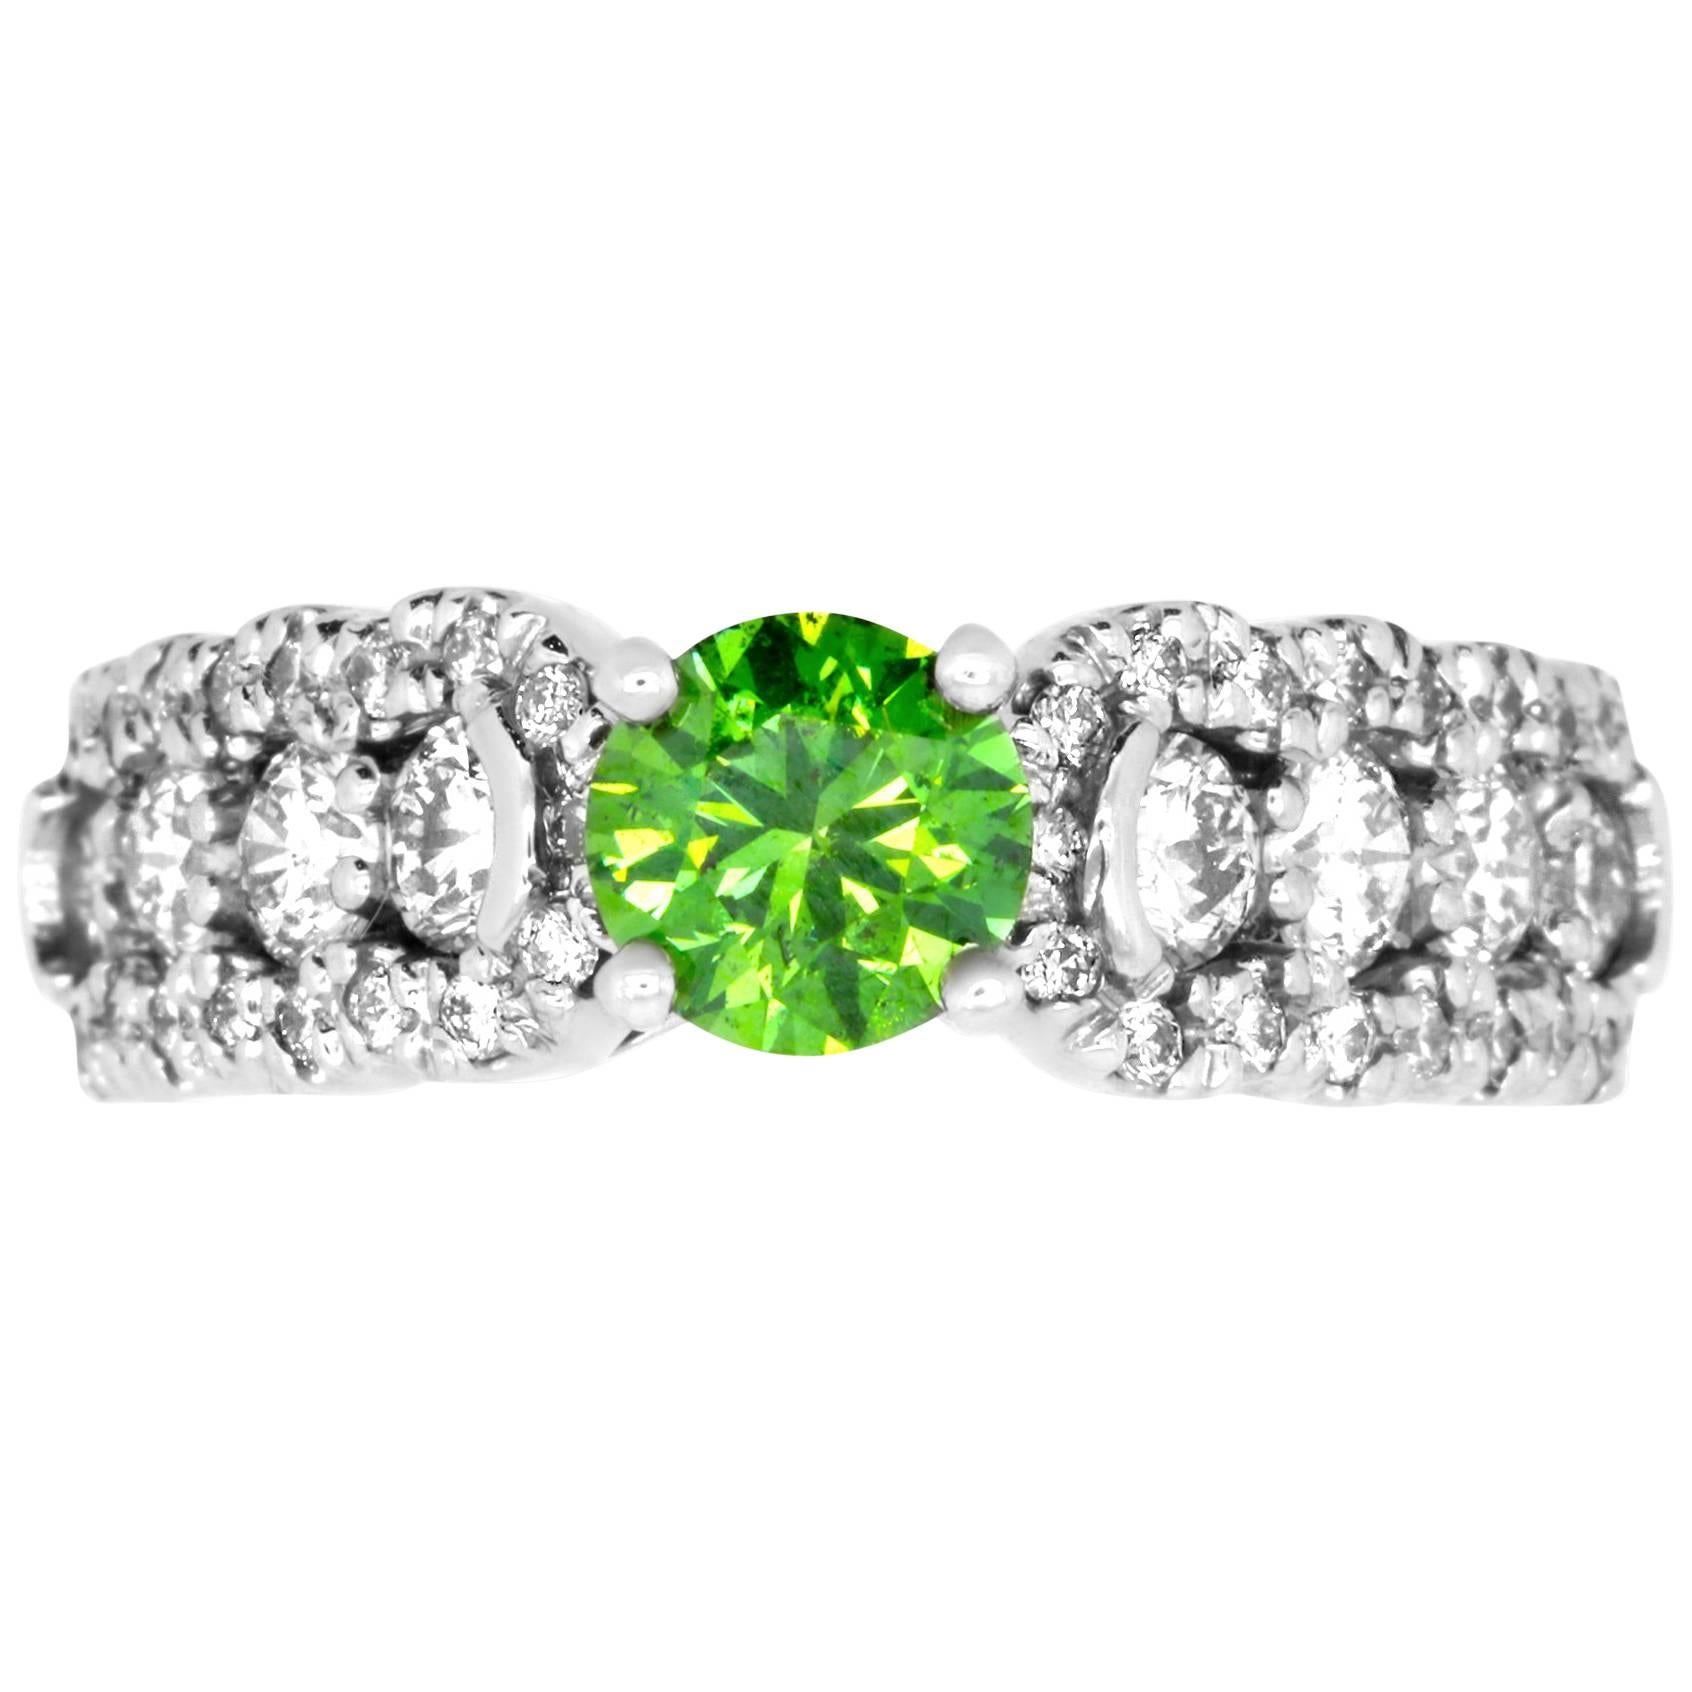 0.85 Carat Round Green Diamond and White Diamond Ring